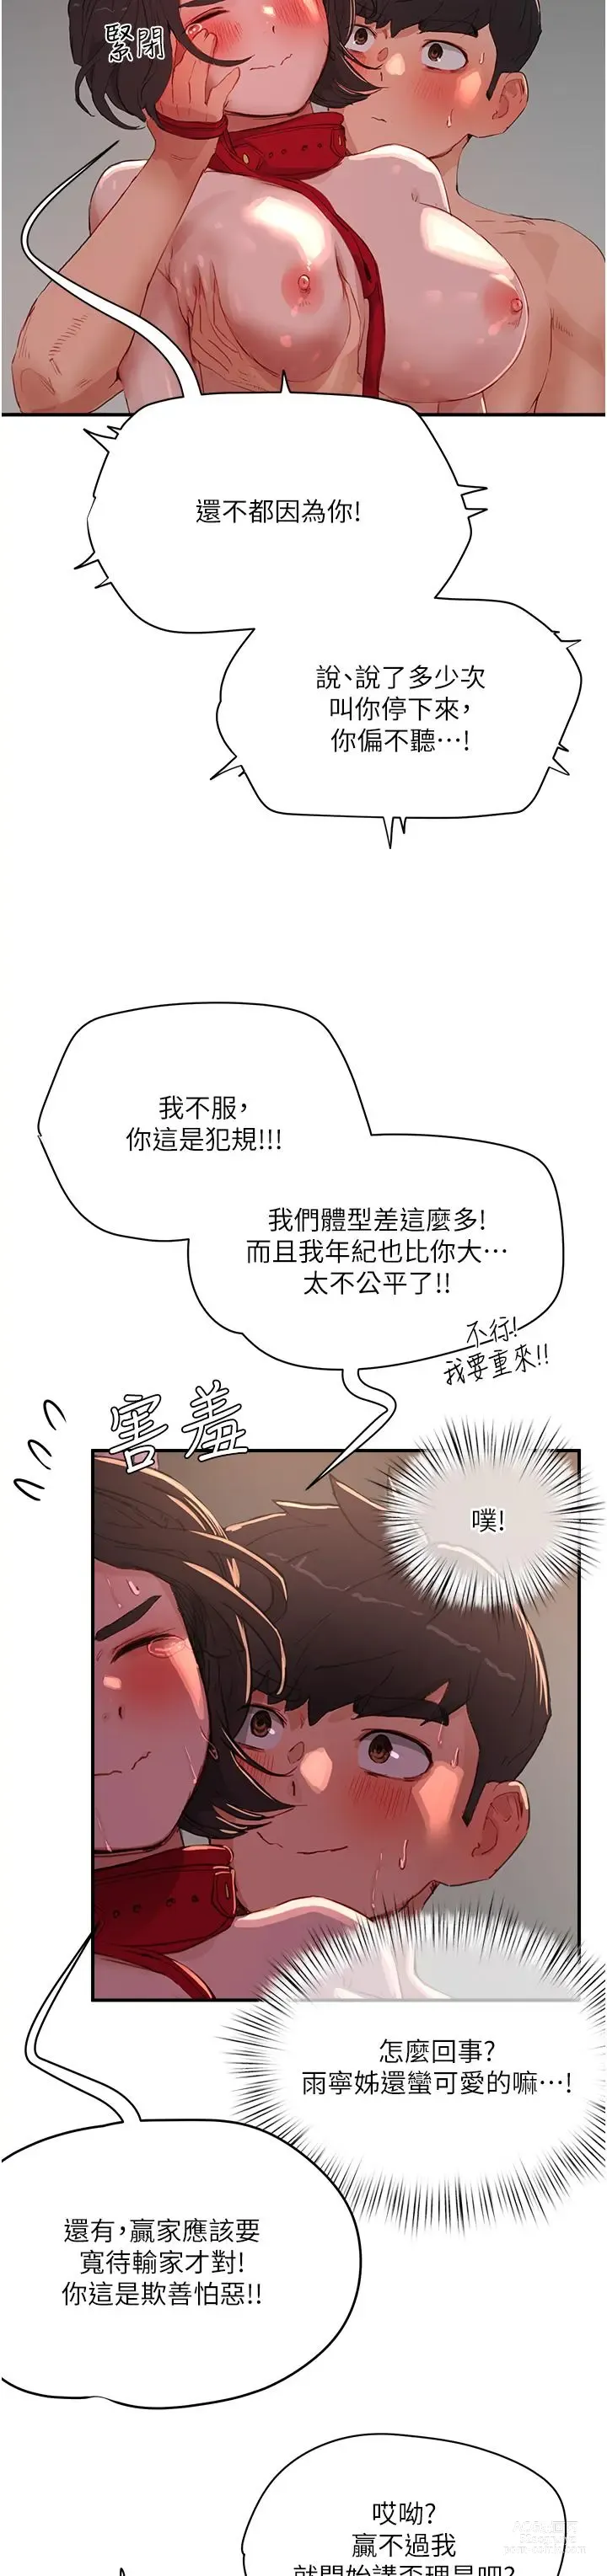 Page 6 of manga 夏日深处/Summer of Love 61-86